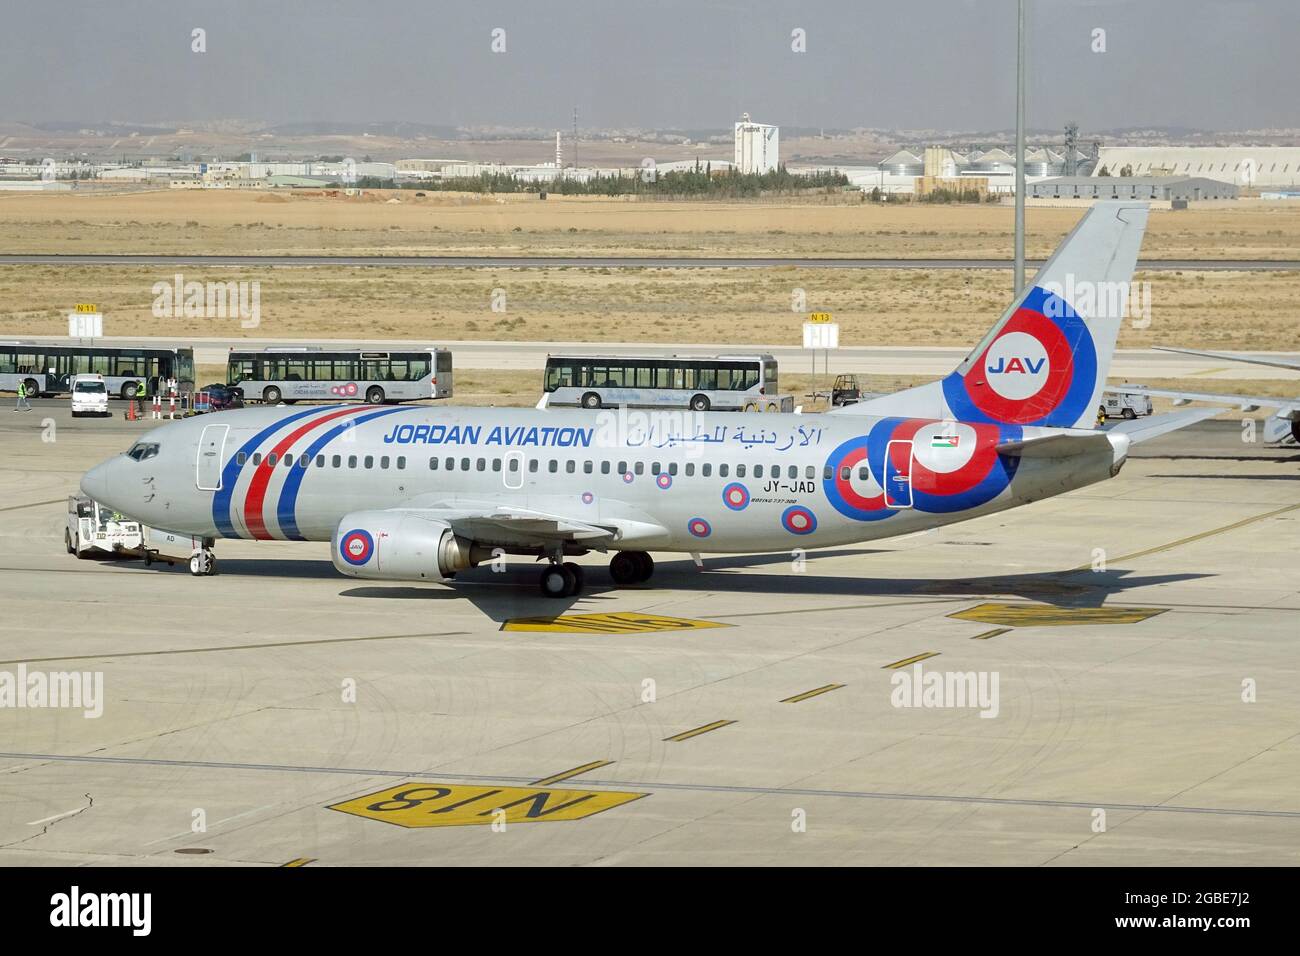 Jordan Aviation, Boeing 737-300 airplane Stock Photo - Alamy